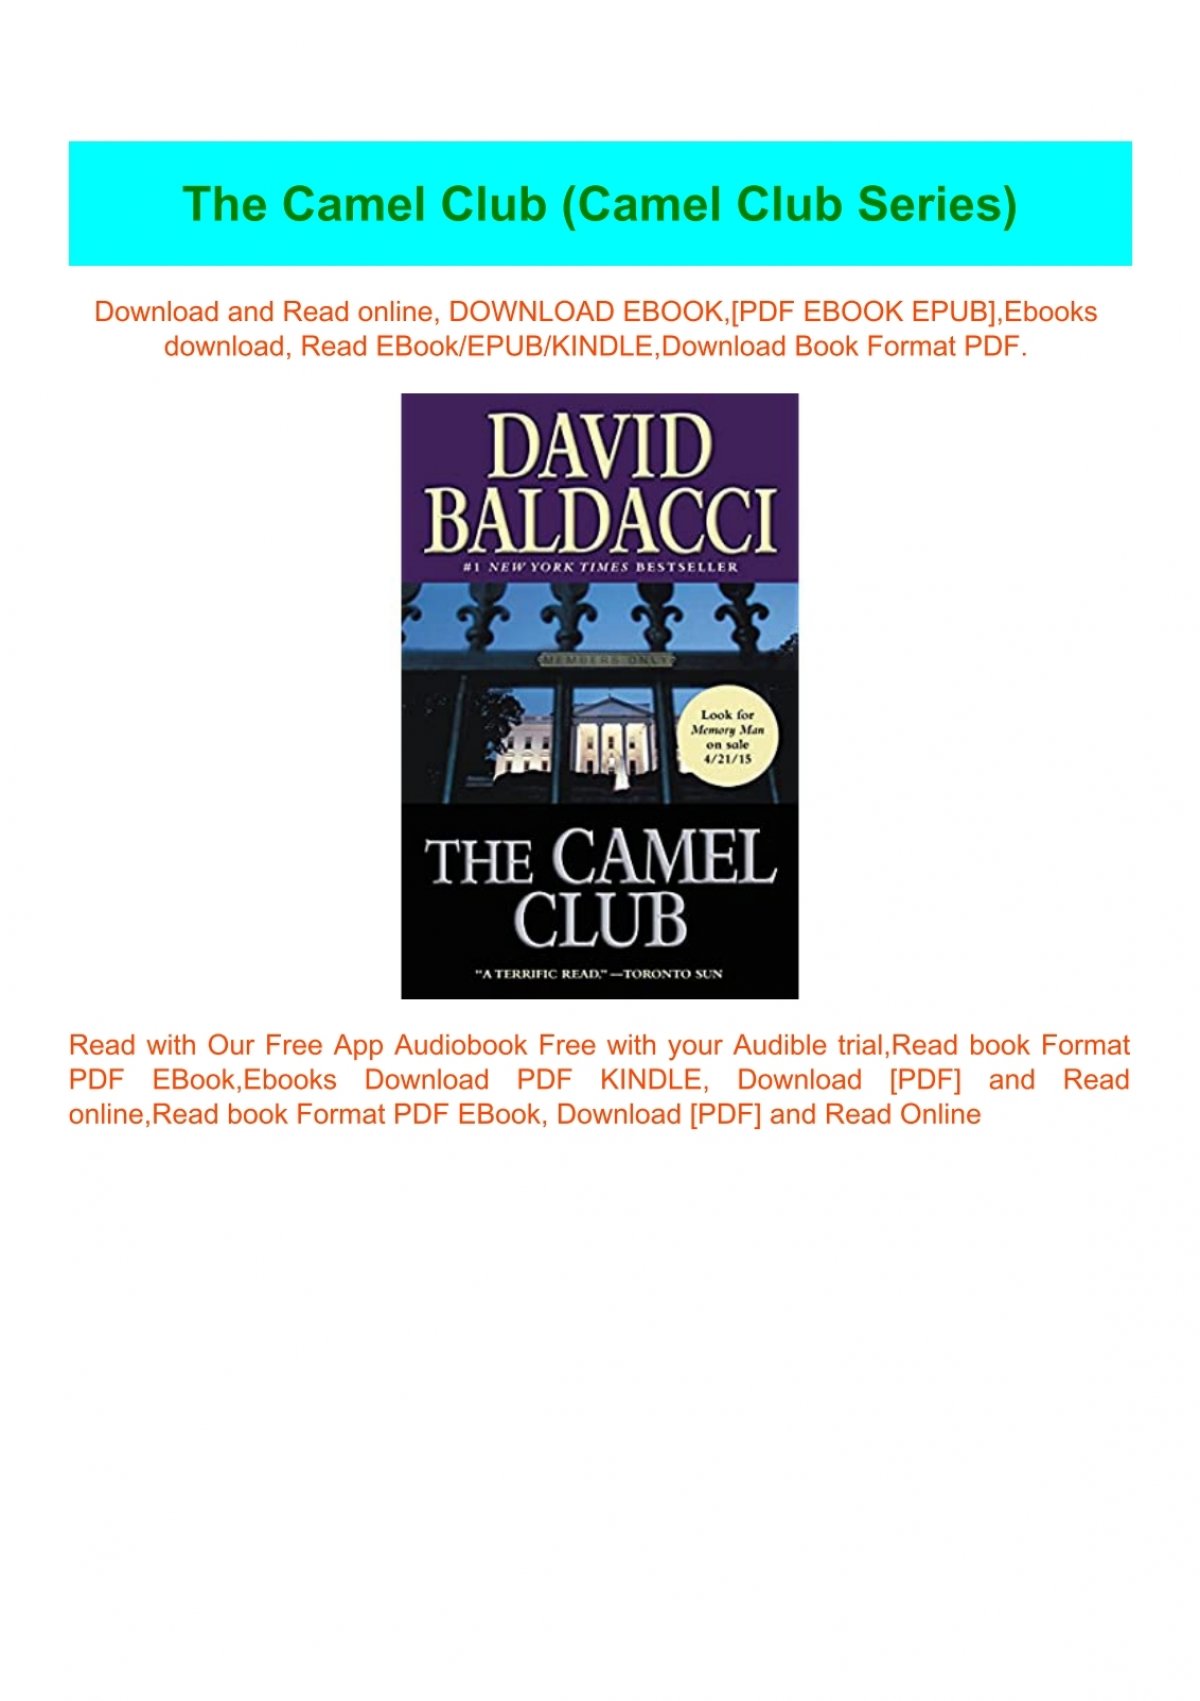 camel club book review